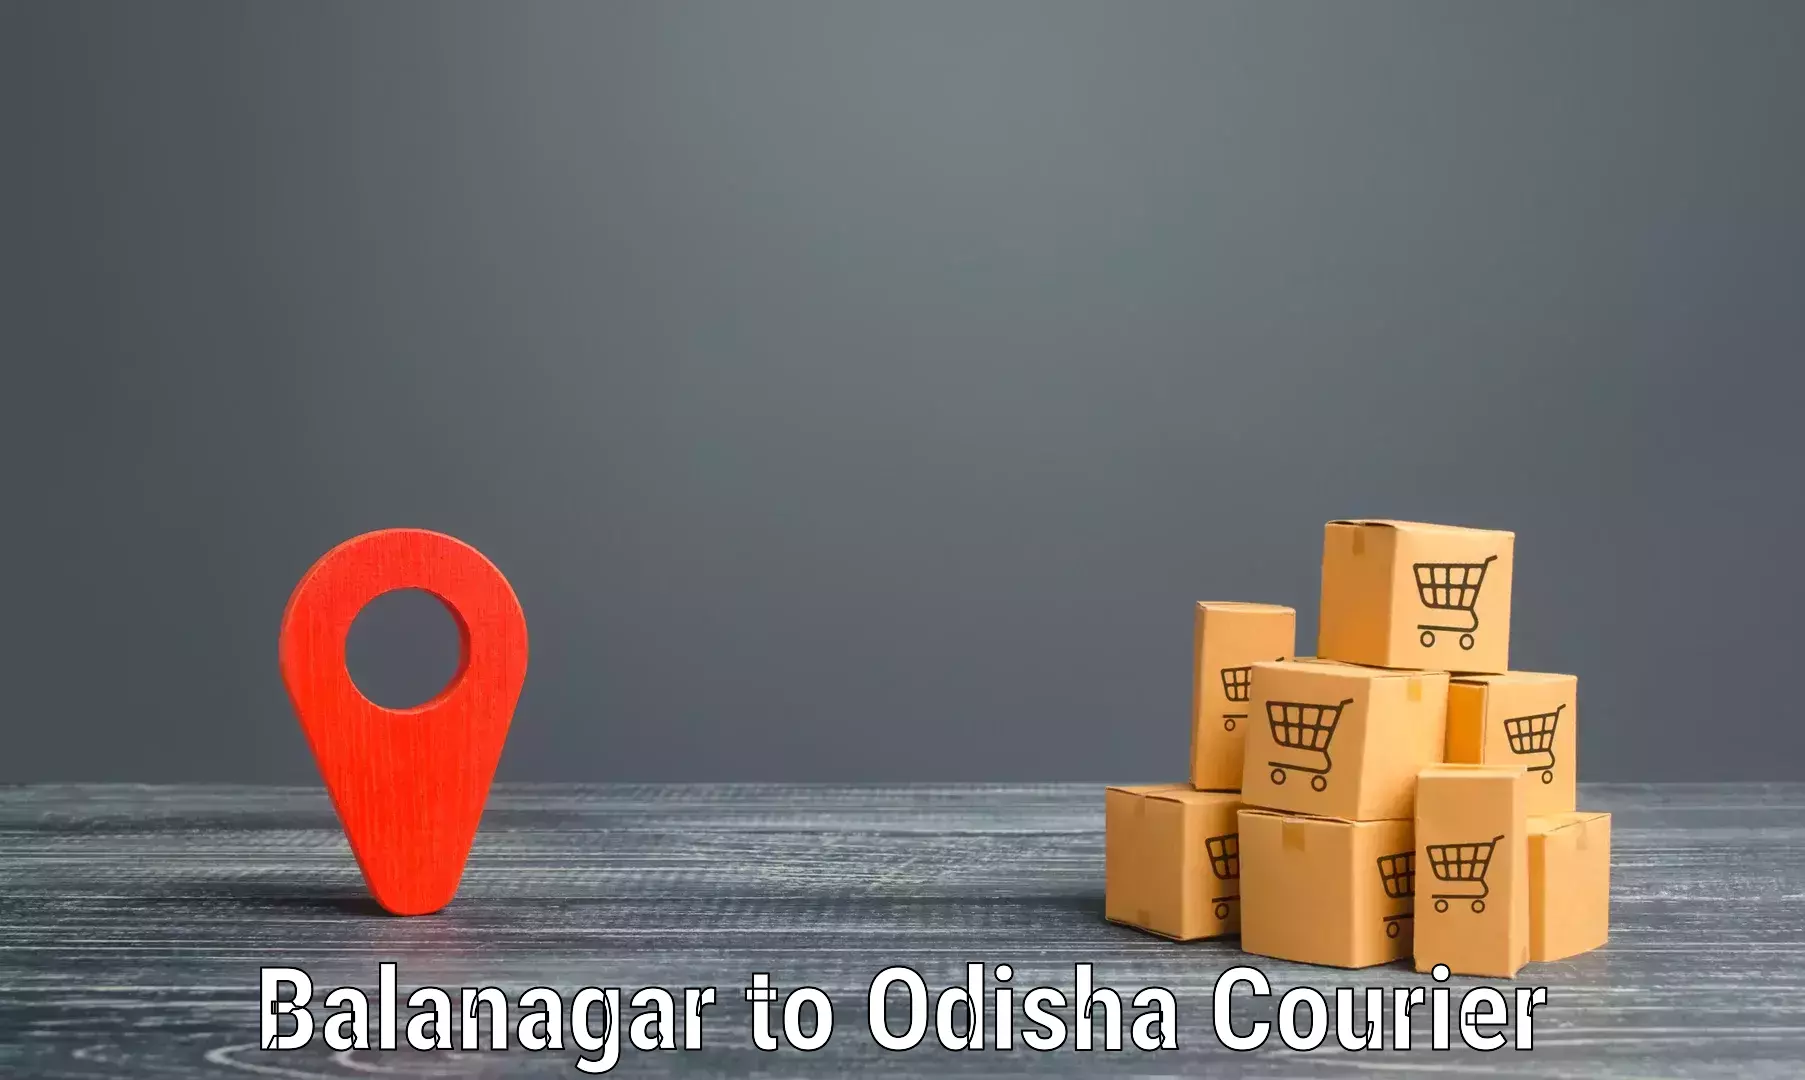 Reliable delivery network Balanagar to Kesinga